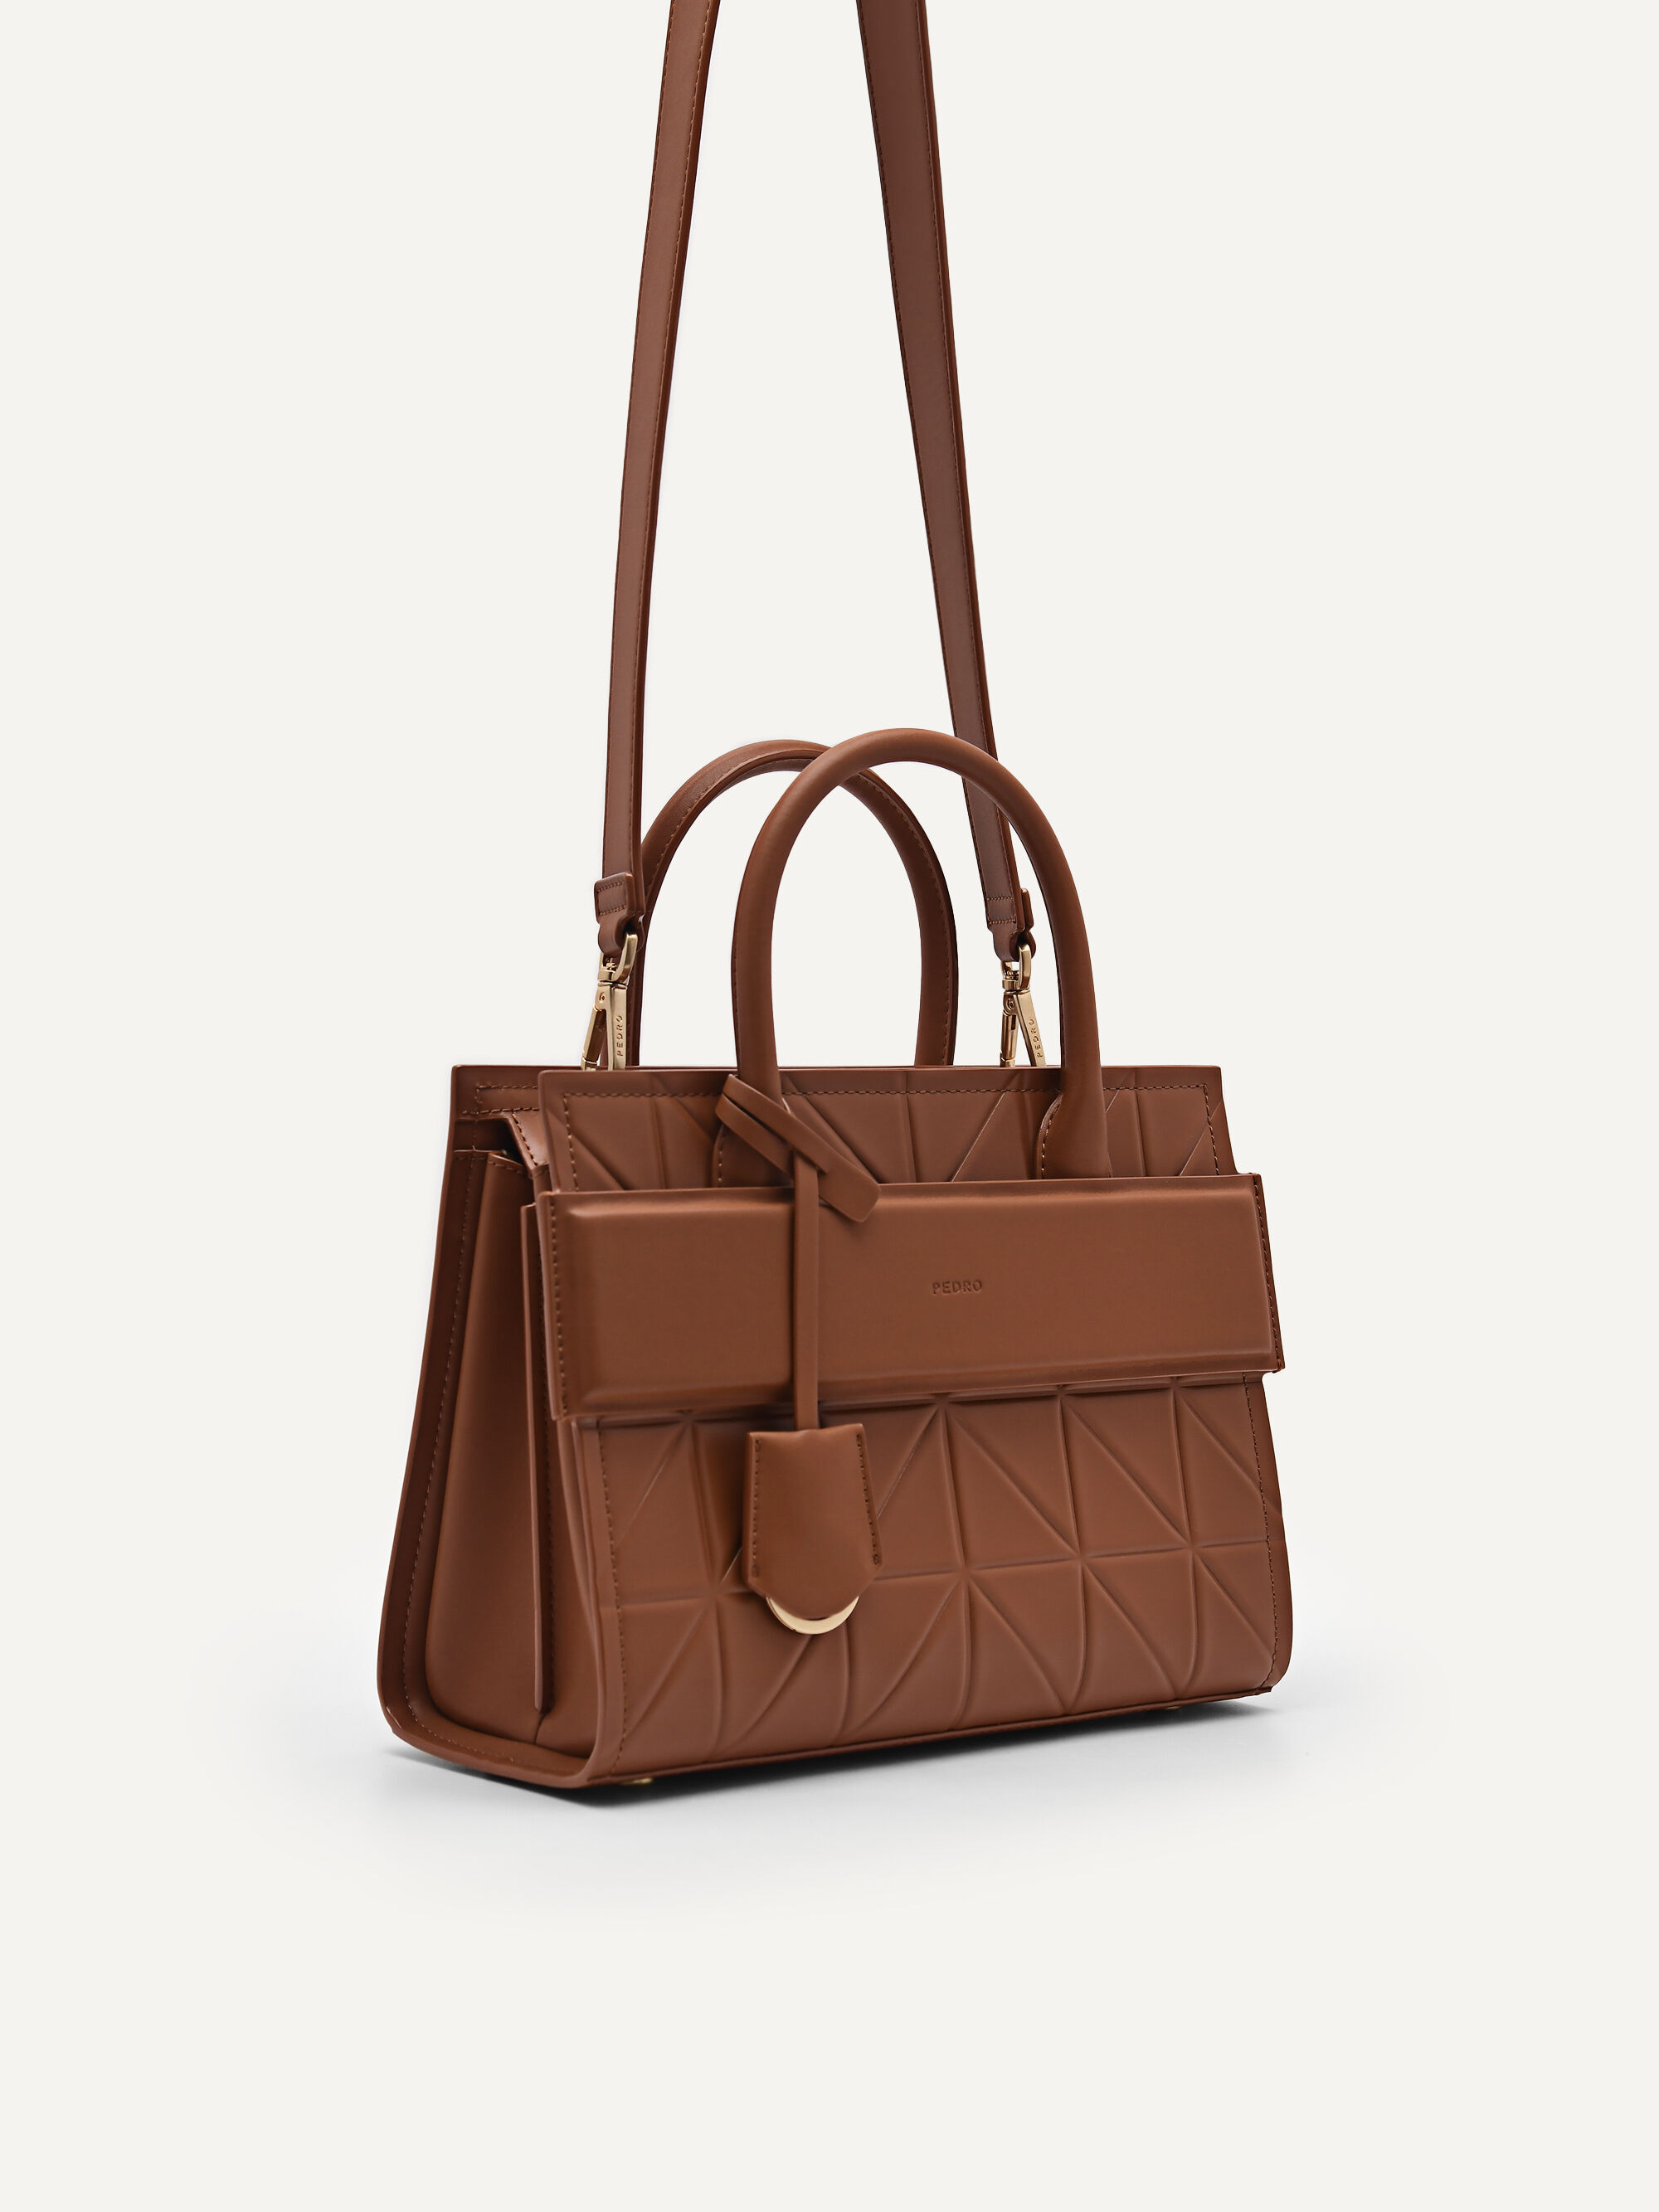 PEDRO GARCÍA, Blush Women's Handbag